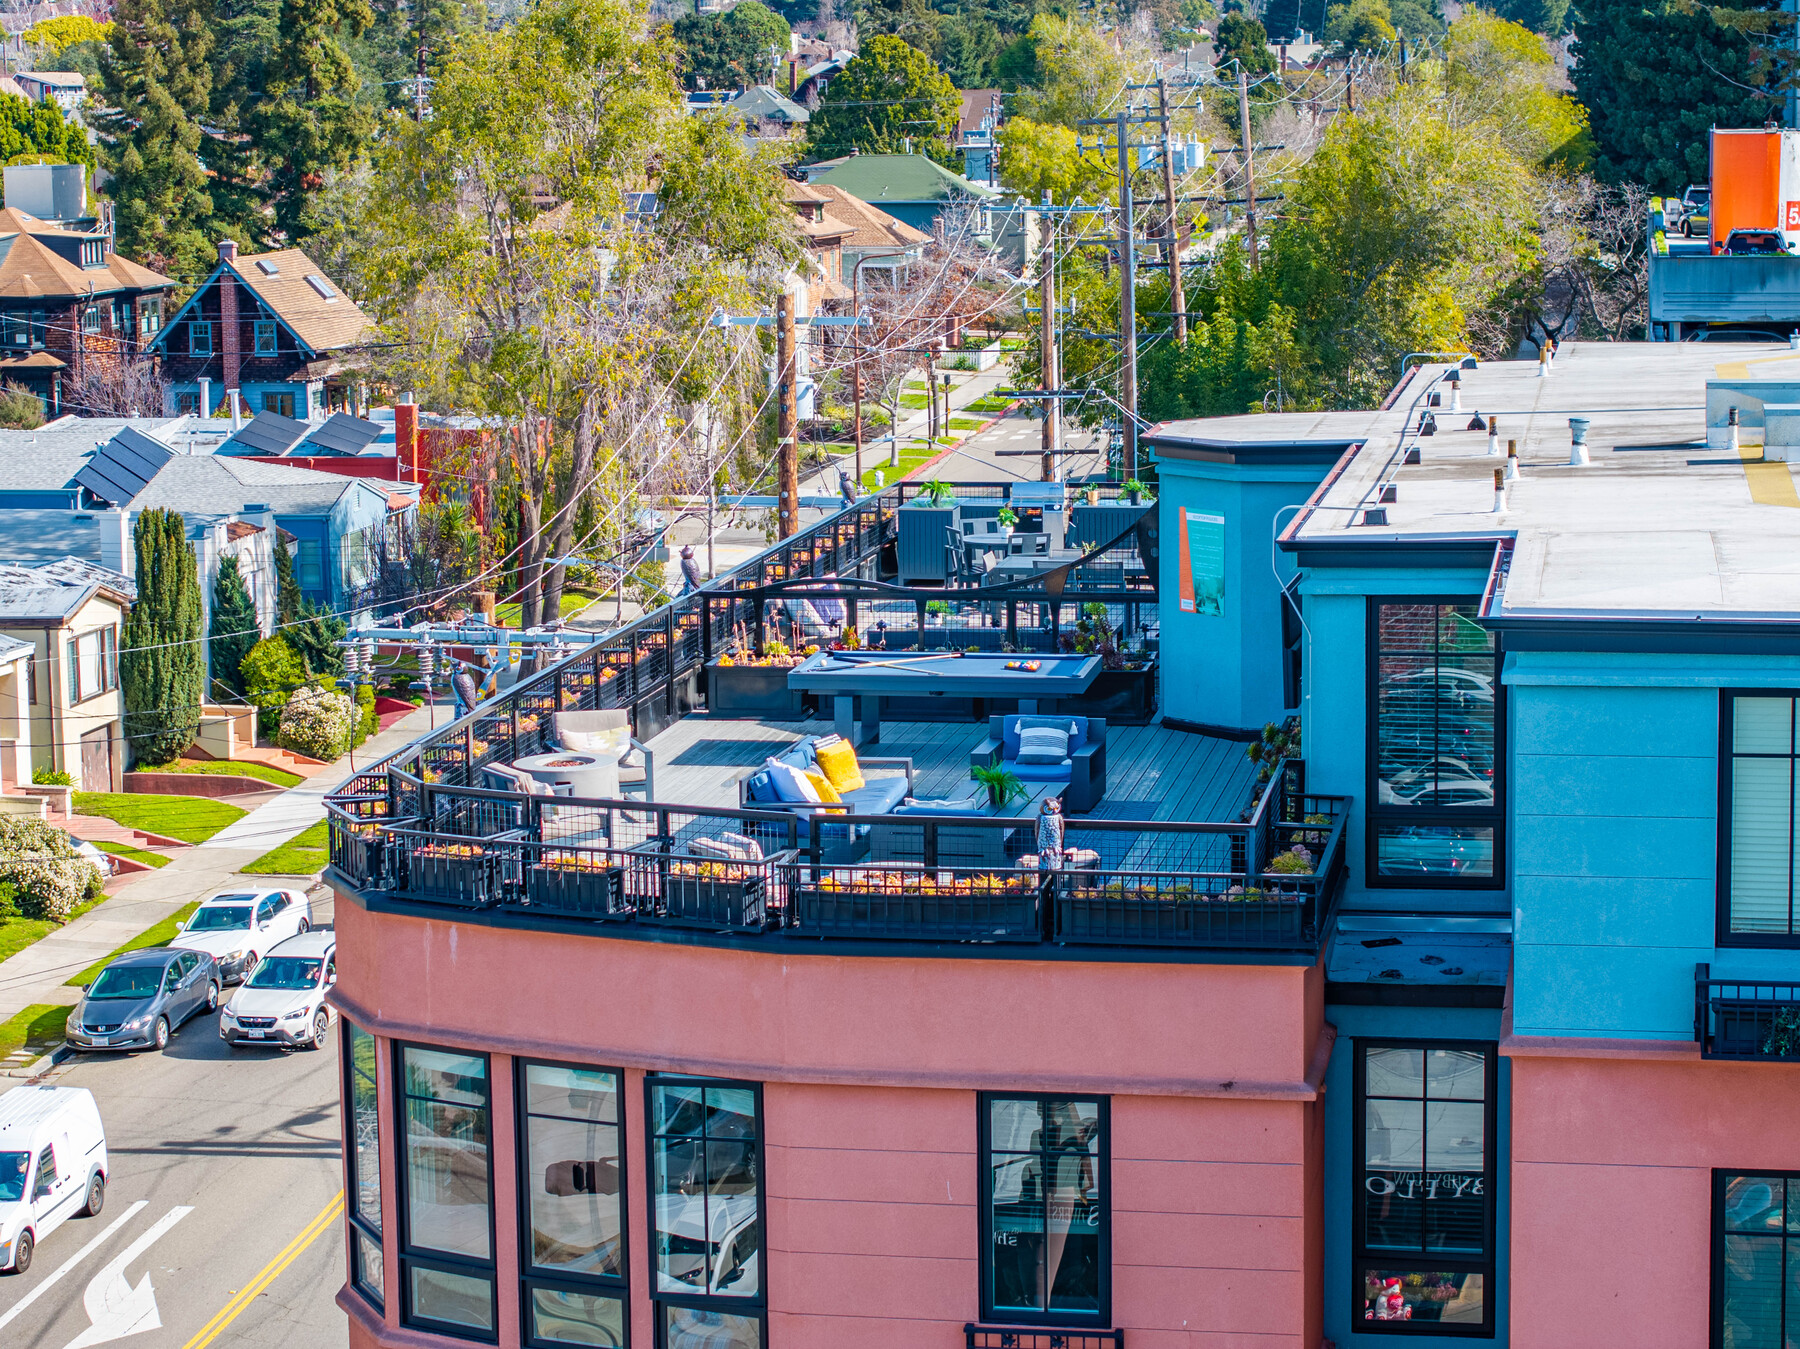 Telegraph Gardens Apartments exterior with rooftop lounge in a walkable Berkeley, CA neighborhood.